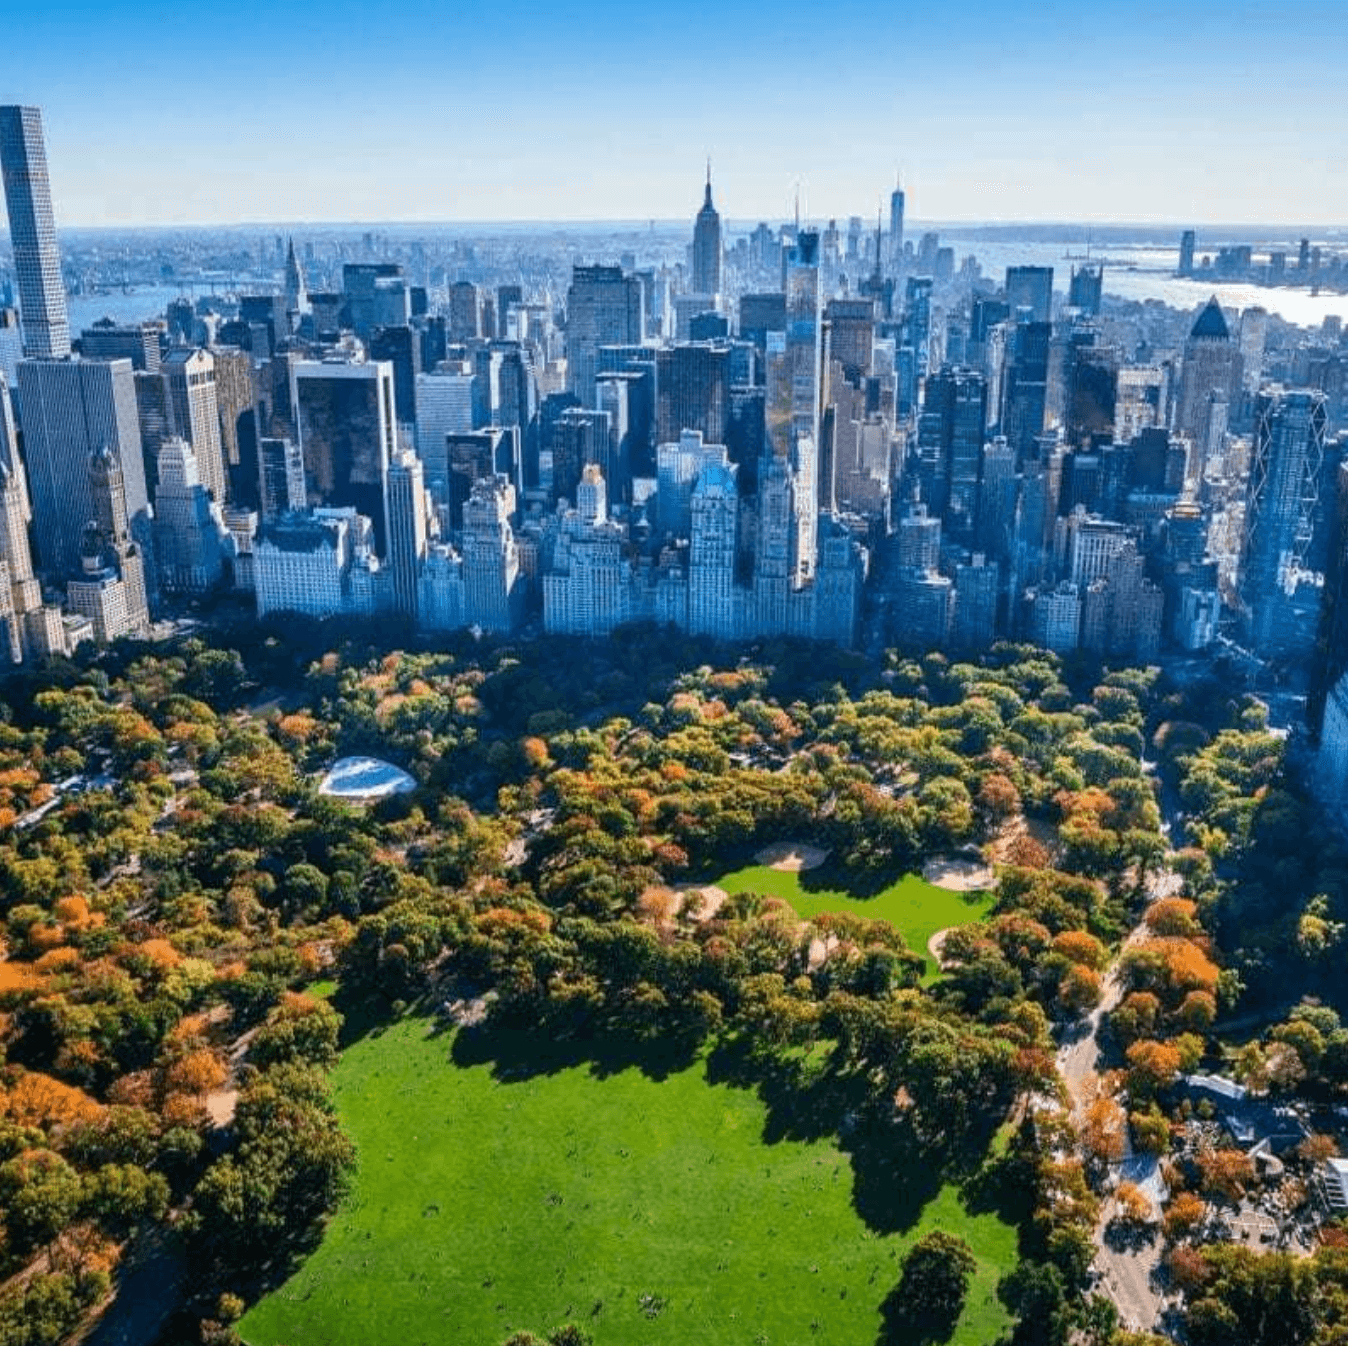 Tour – The best of Central Park